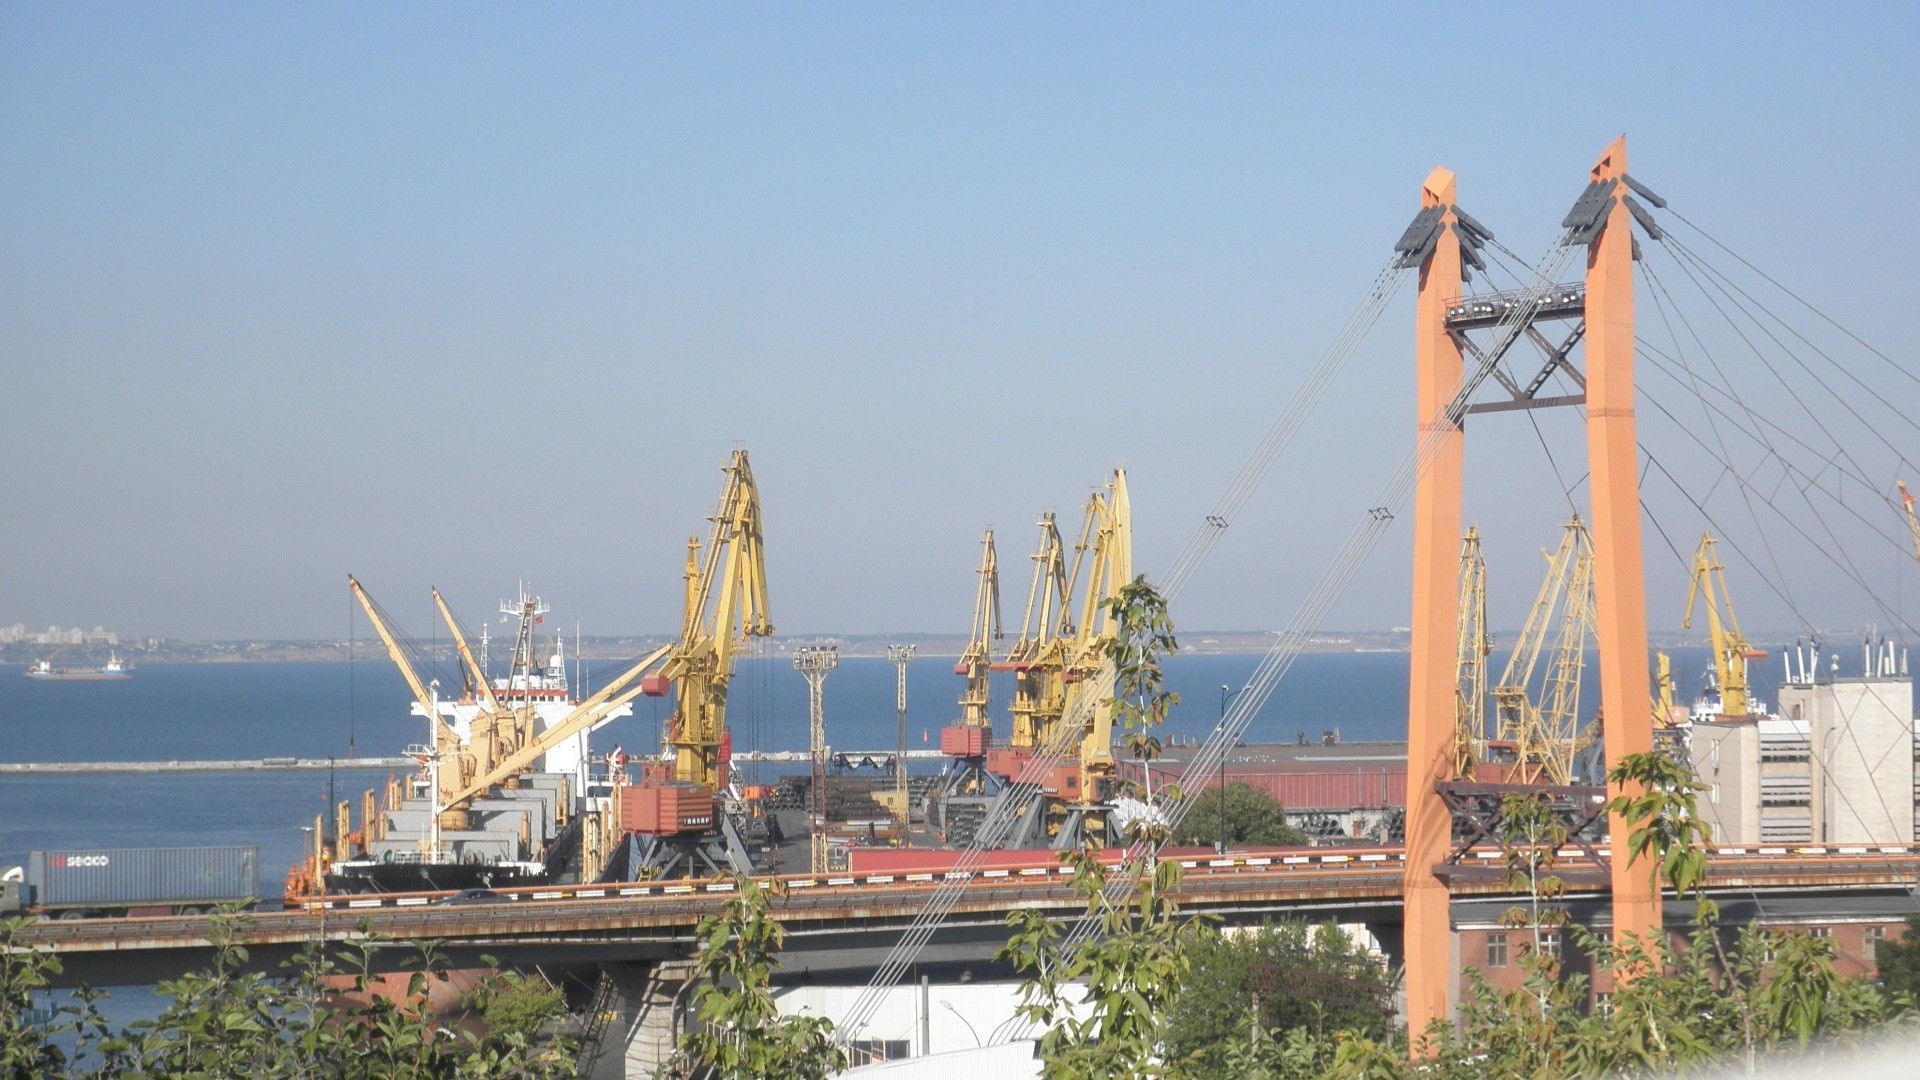 Port w Odessie. Fot. miszmag / flickr.com